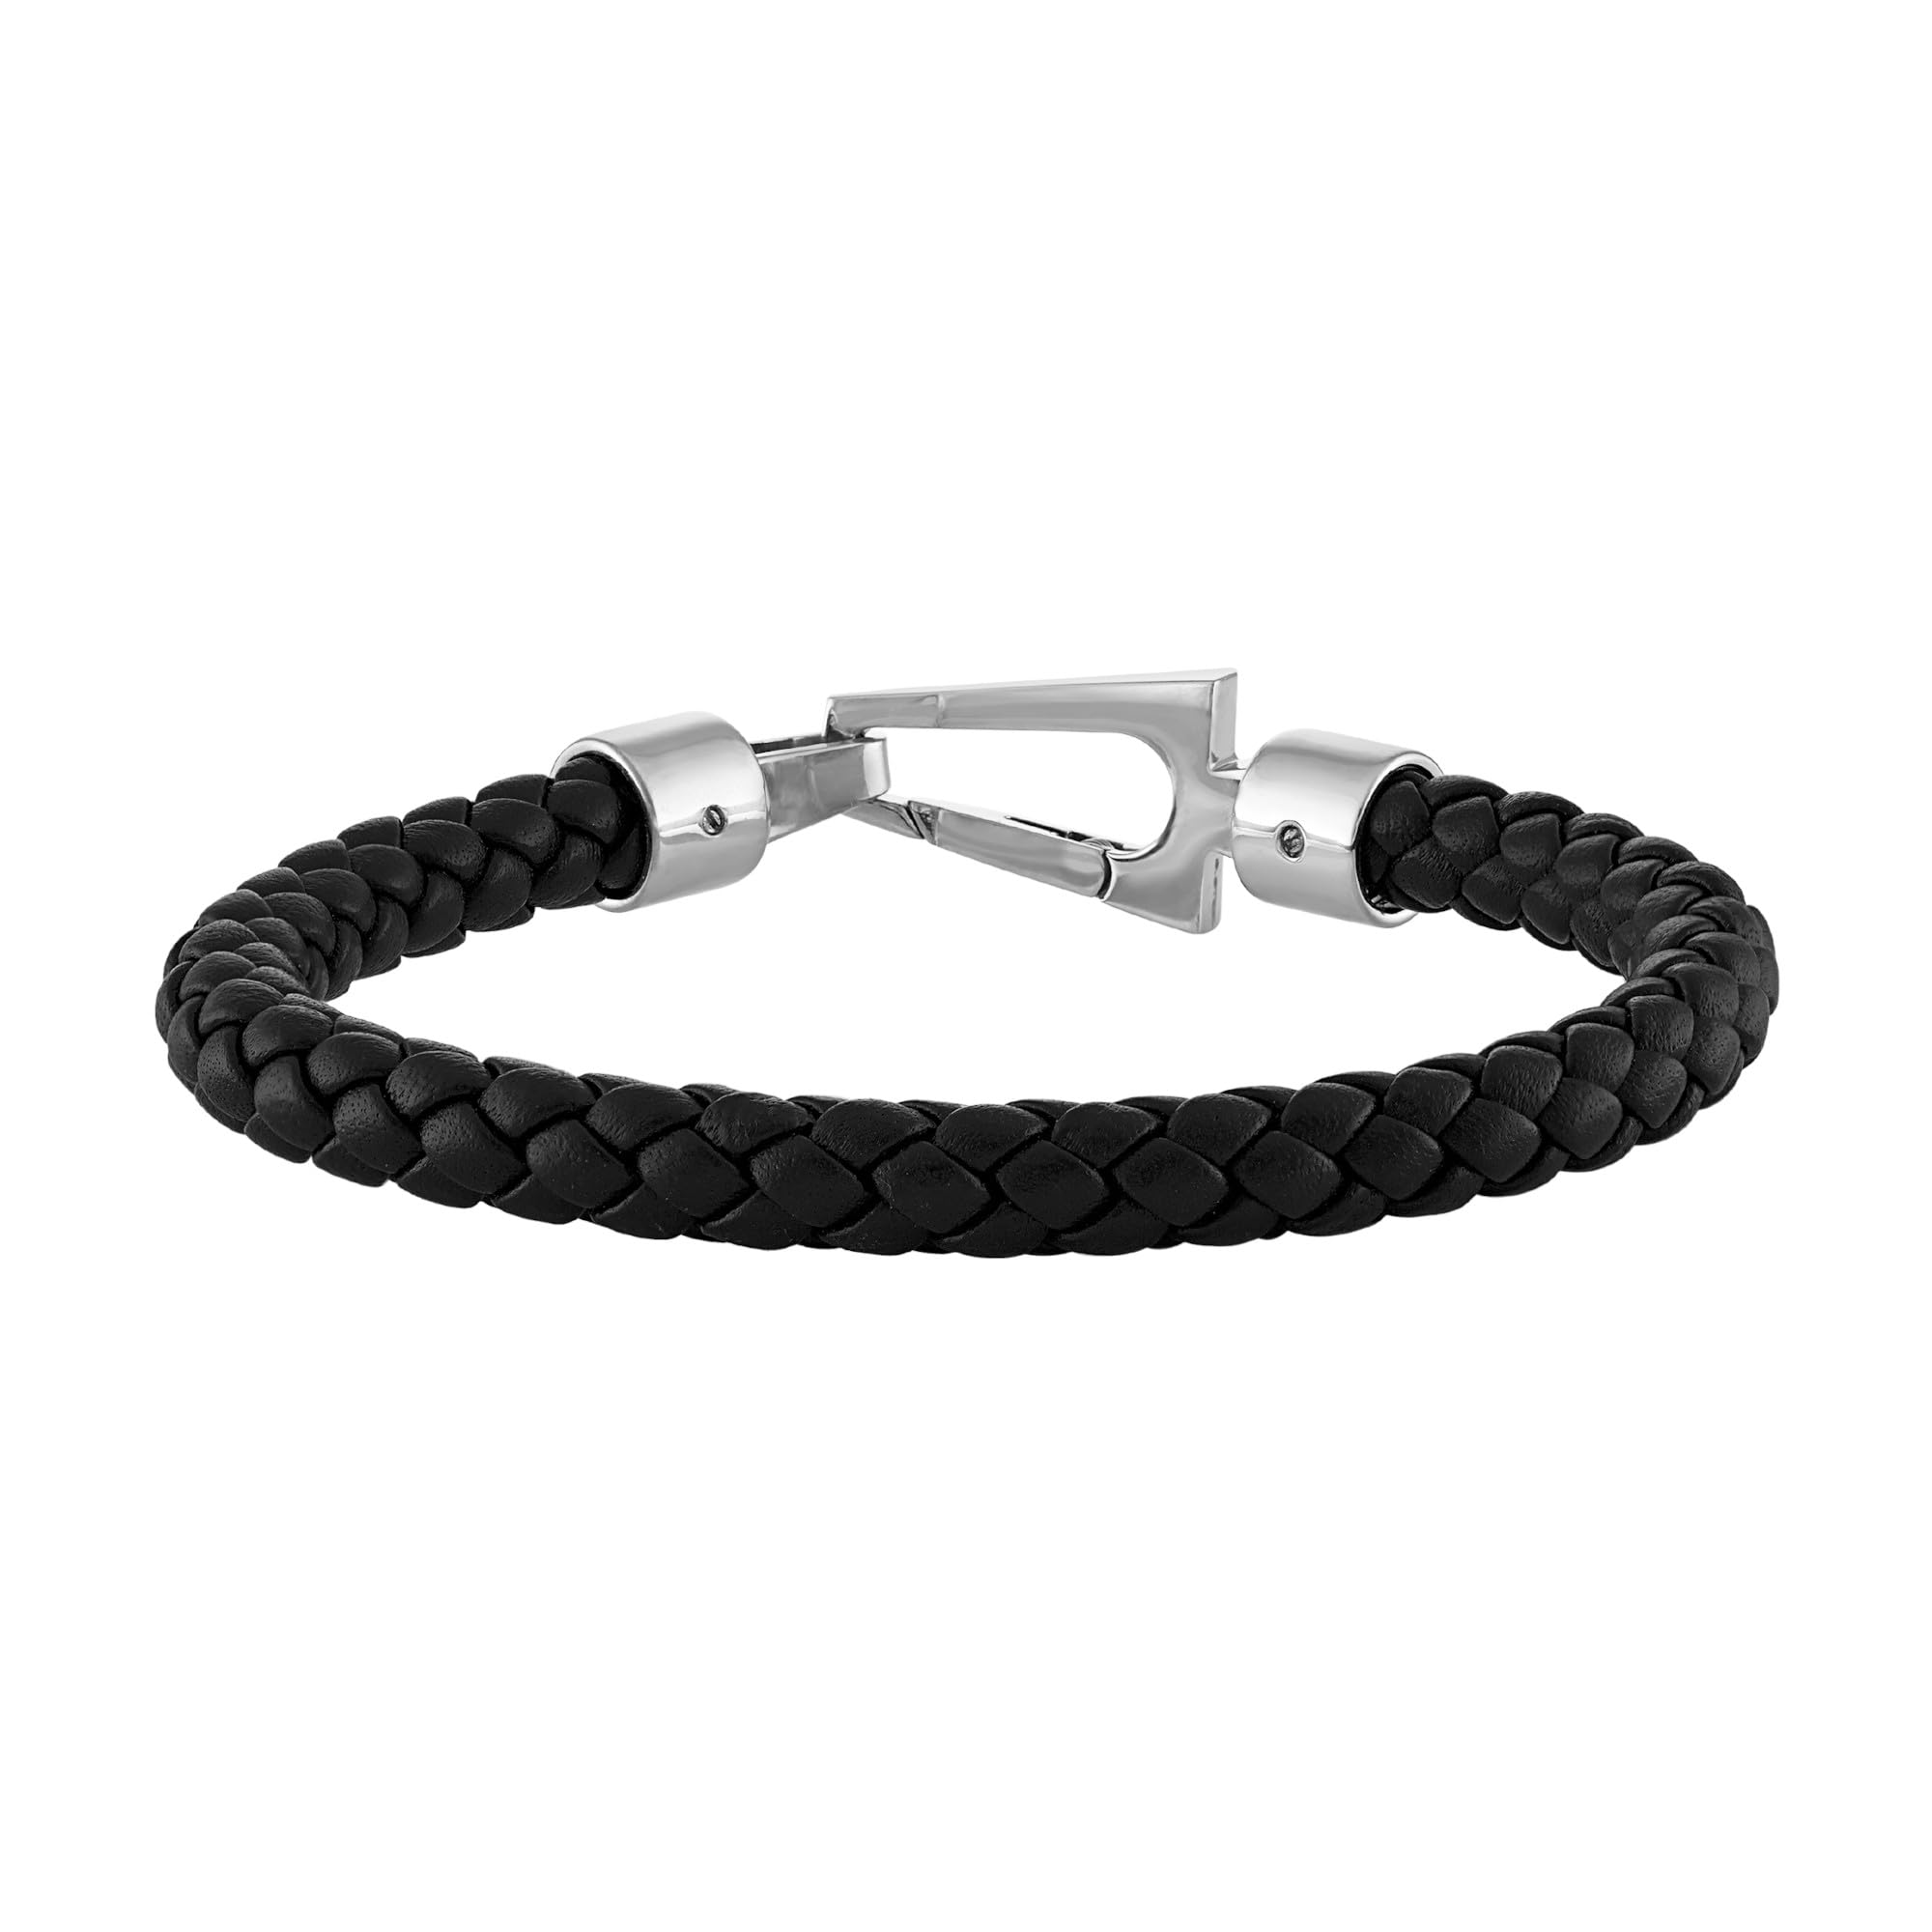 Bulova Men's Jewelry Marine Star Black Leather Braided Bracelet, Tuning Fork Shape Stainless Steel Clasp, Size Medium, Size Large Style: BVB1046-SBSTNA